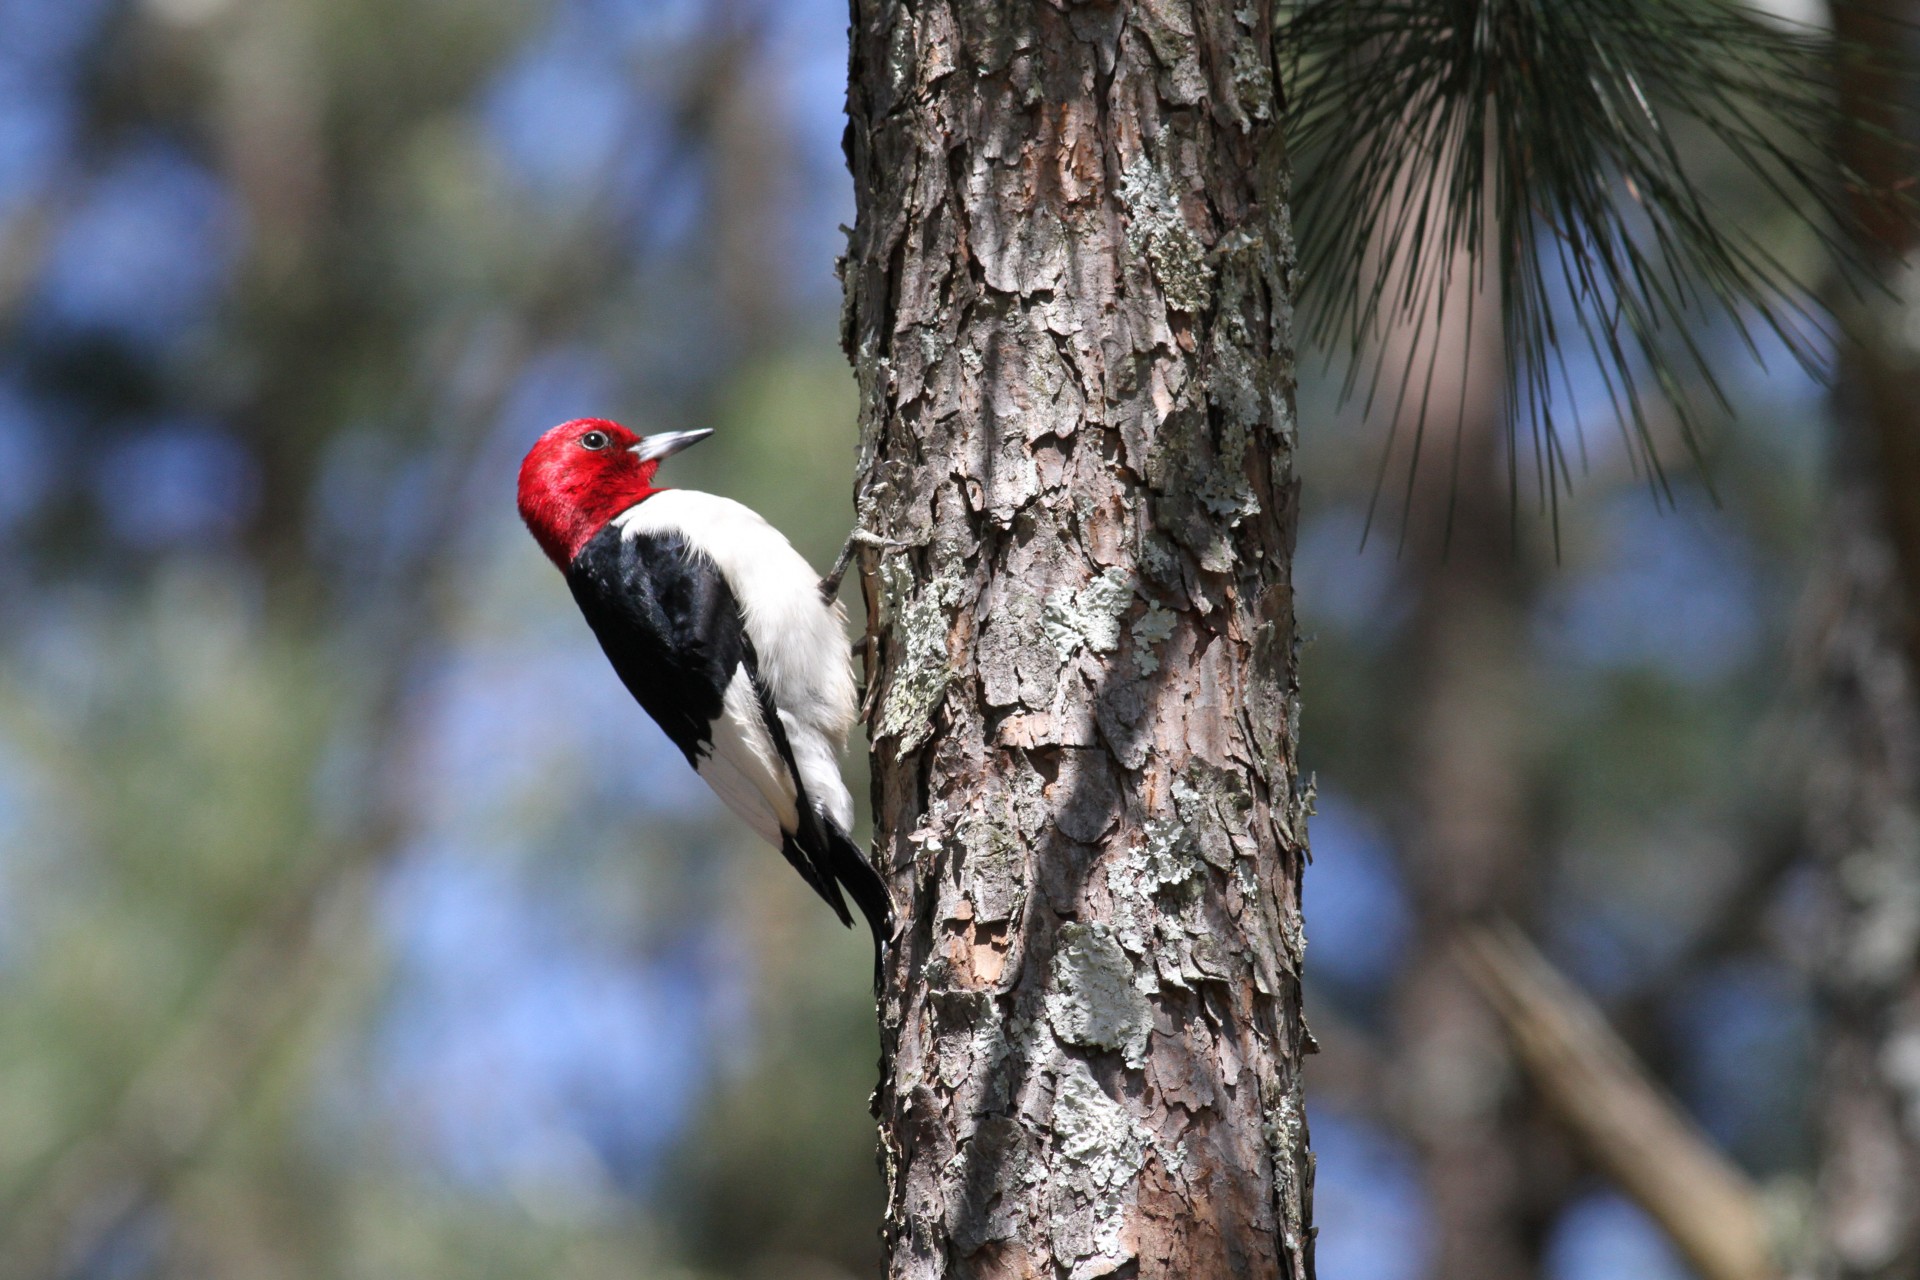 Red-headed woodpecker sitting on a pine tree